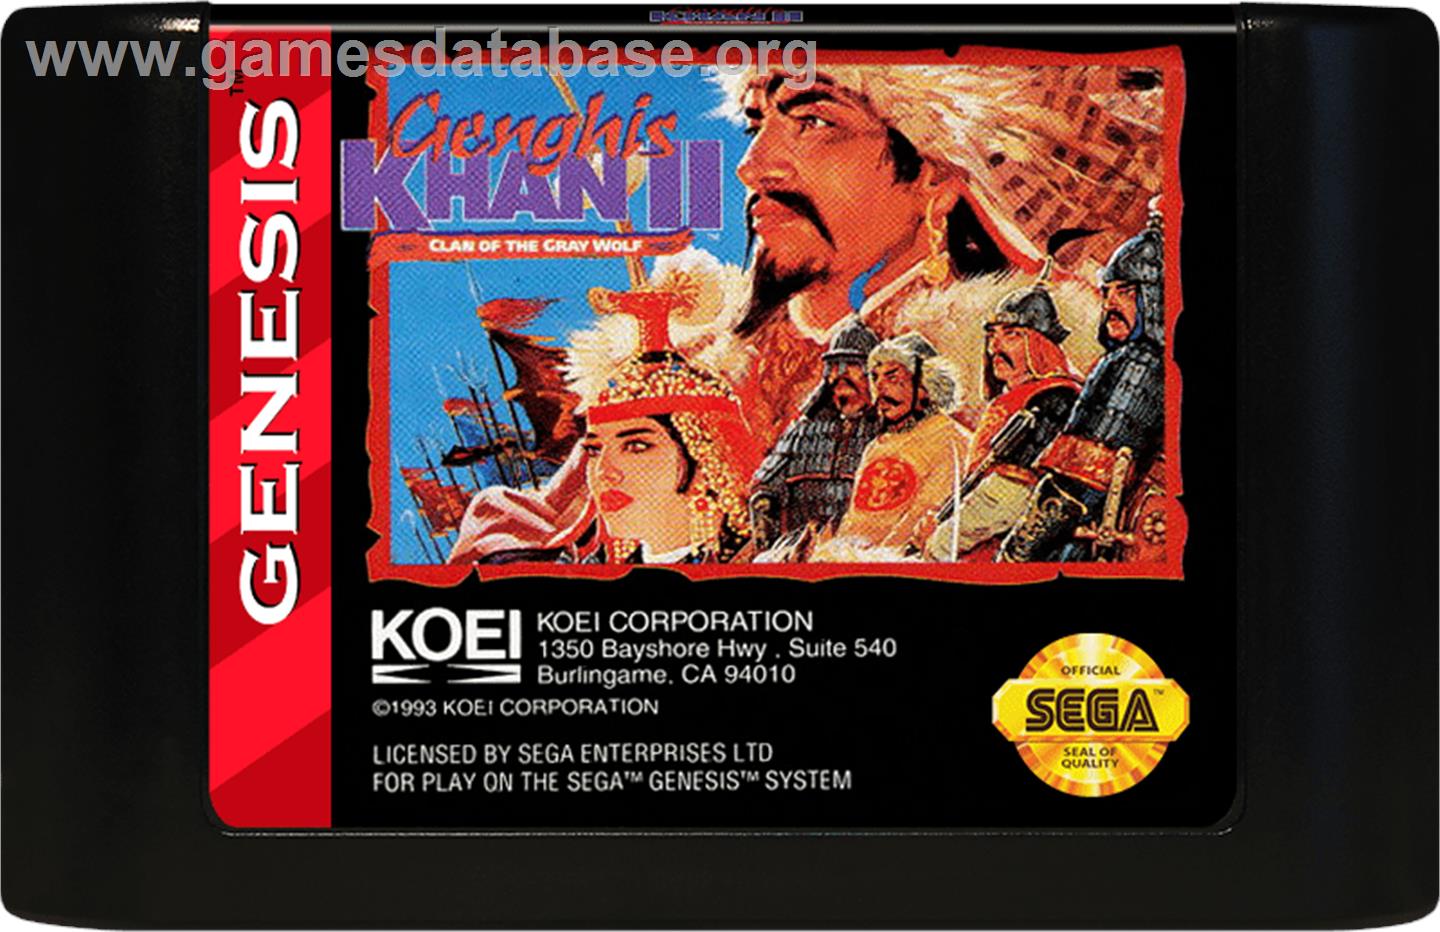 Genghis Khan 2: Clan of the Grey Wolf - Sega Genesis - Artwork - Cartridge